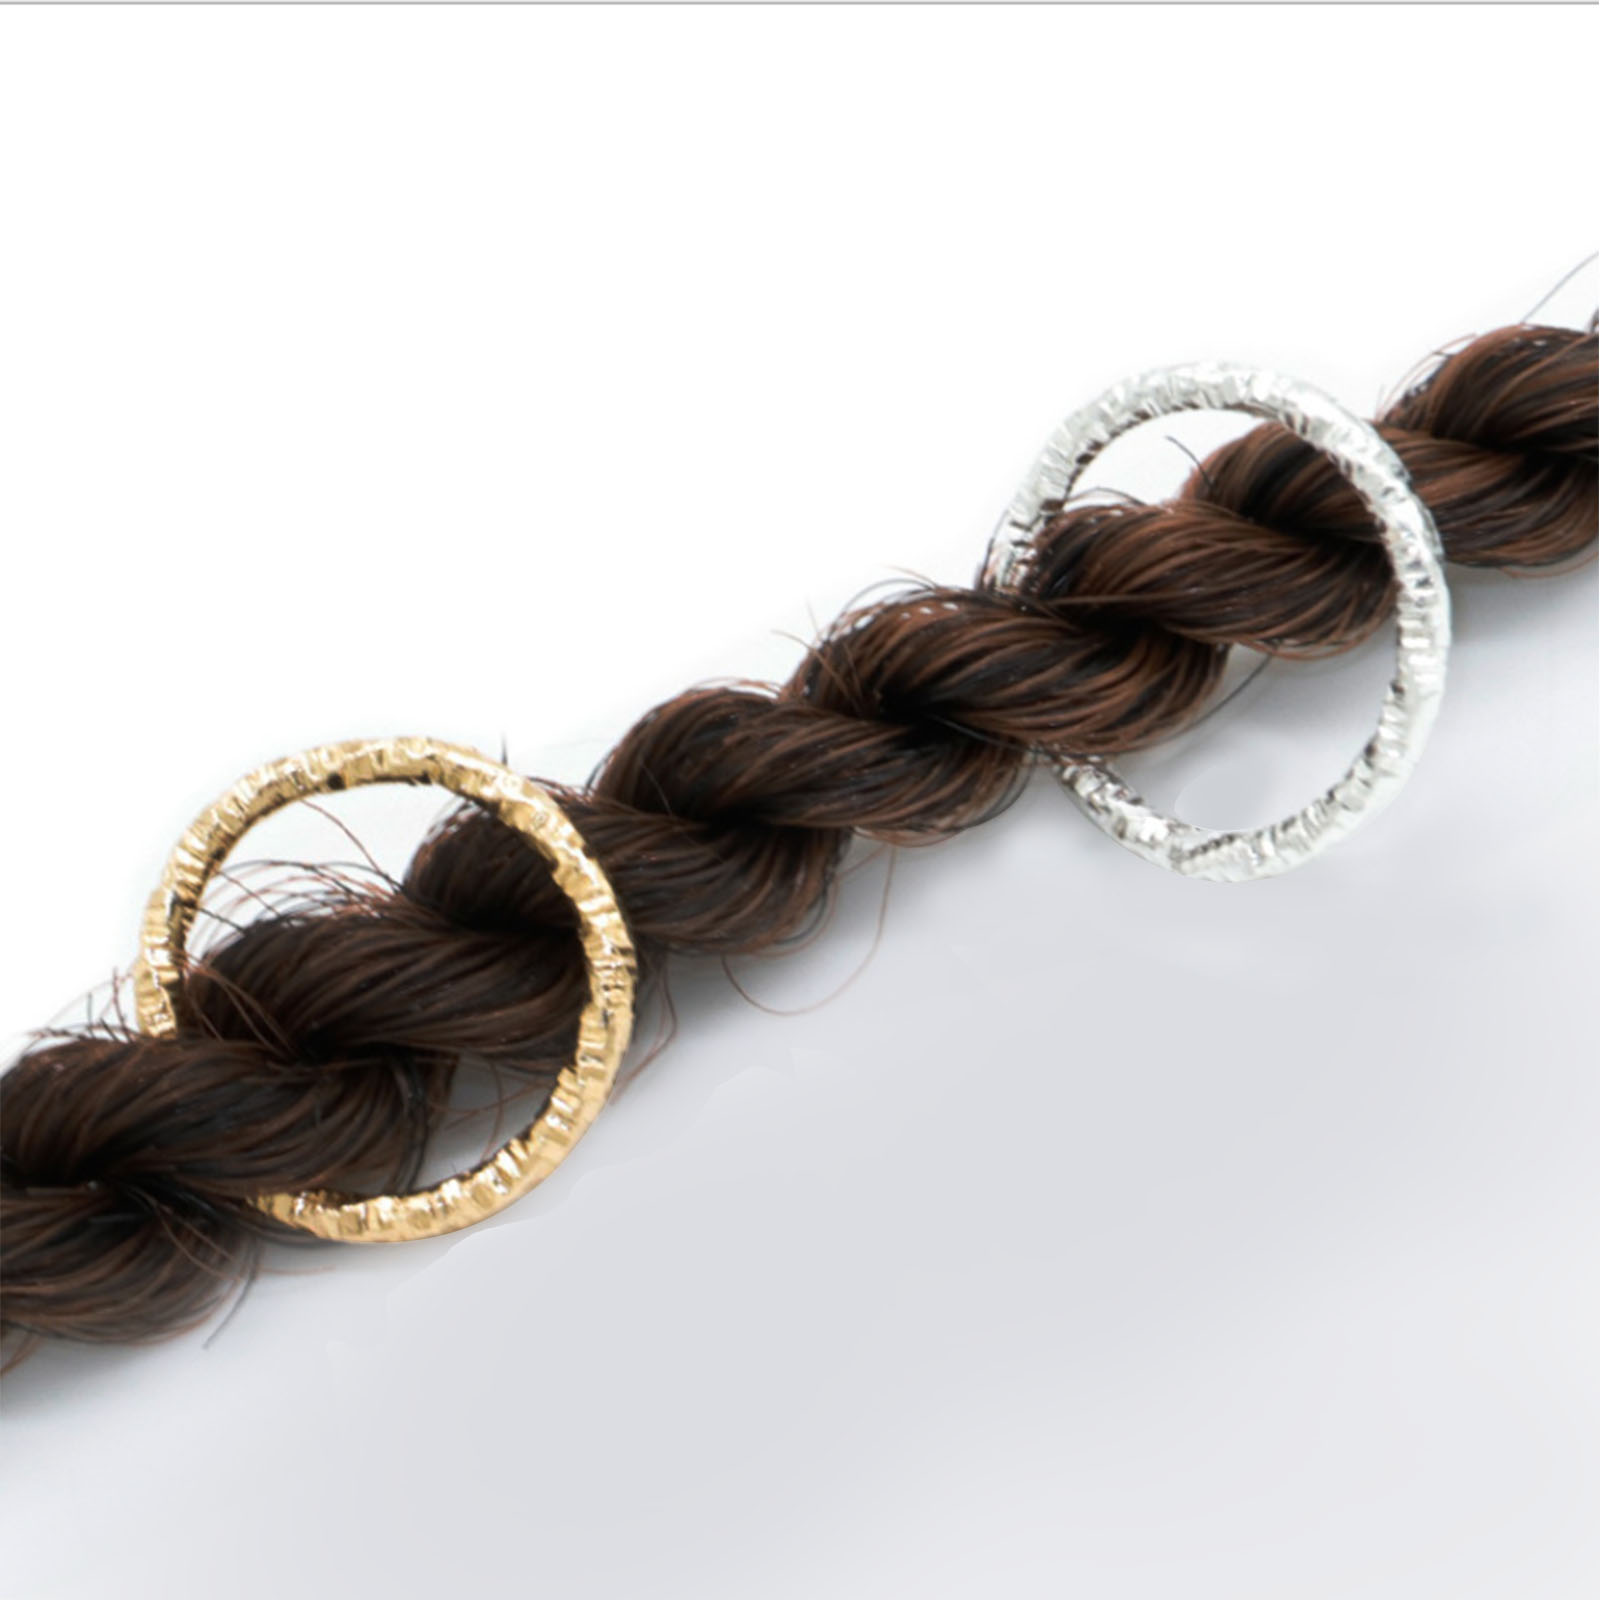 Hair Rings - Decorate Hair Rings & Hair Beads - for Set Hair, Braids or Dreadlocks - 140 Pieces